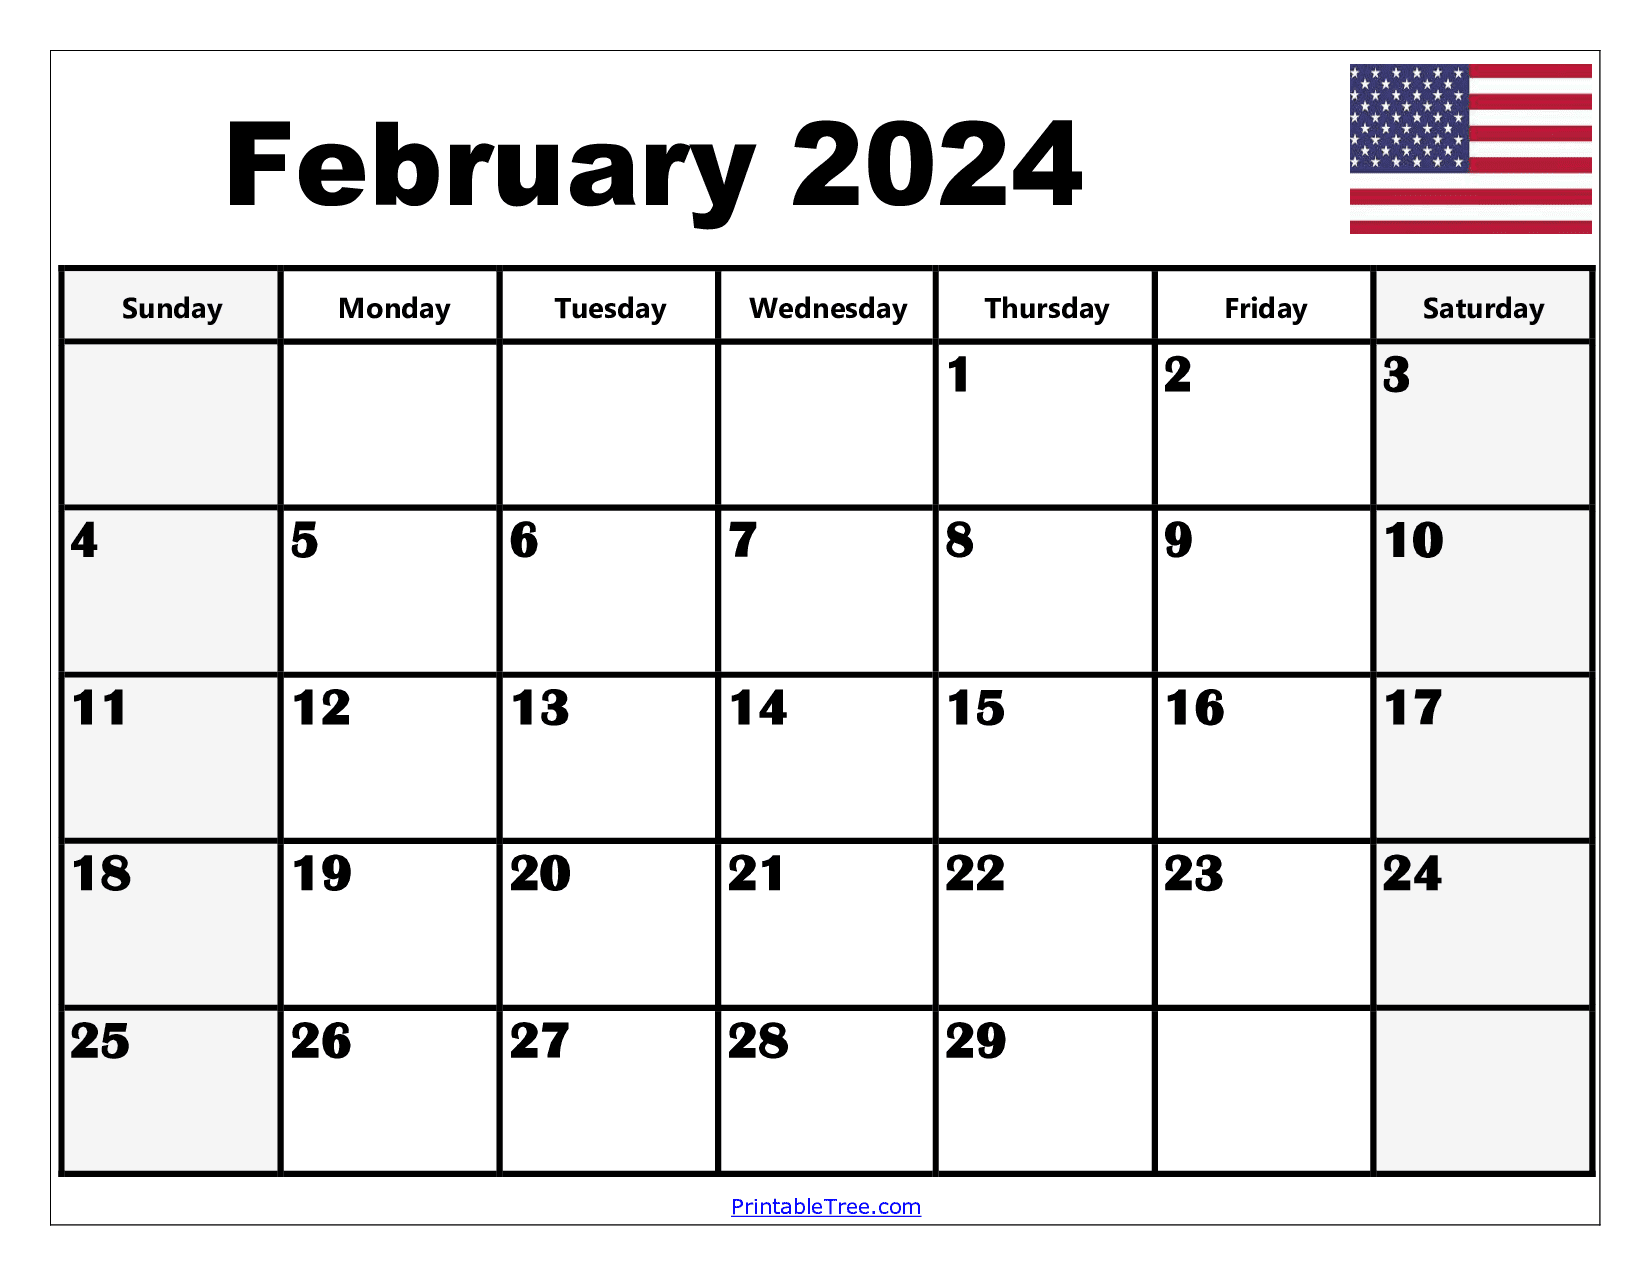 February 2024 Calendar Printable Pdf Template With Holidays for Feb 2024 Calendar With Holidays Printable